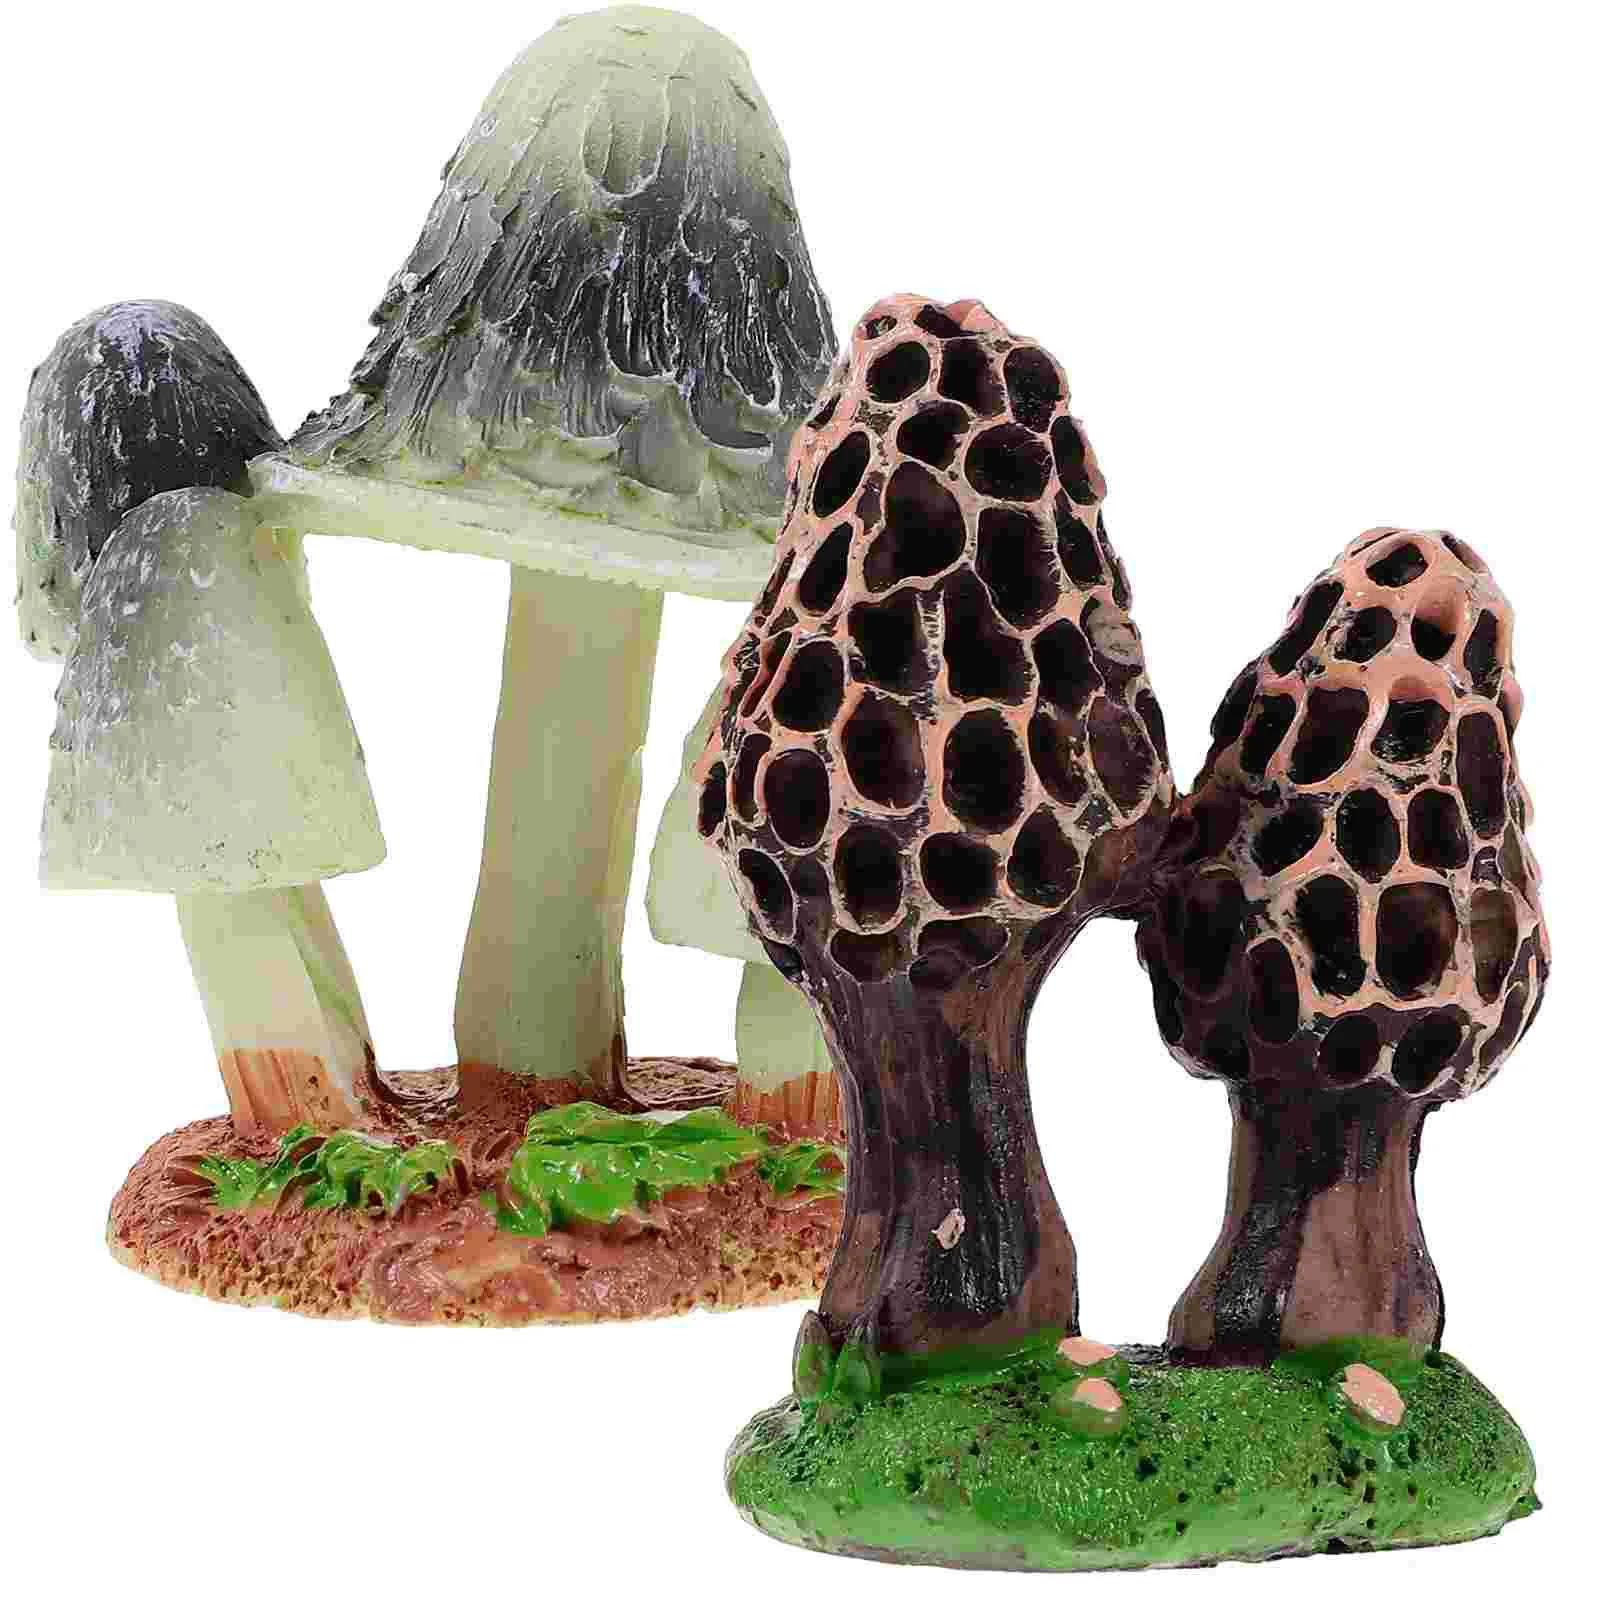 

2 Pcs Mushroom Figurine Home Bonsai Decor Crafts Miniature Resin Figurines Statue Decoration Fairy DIY